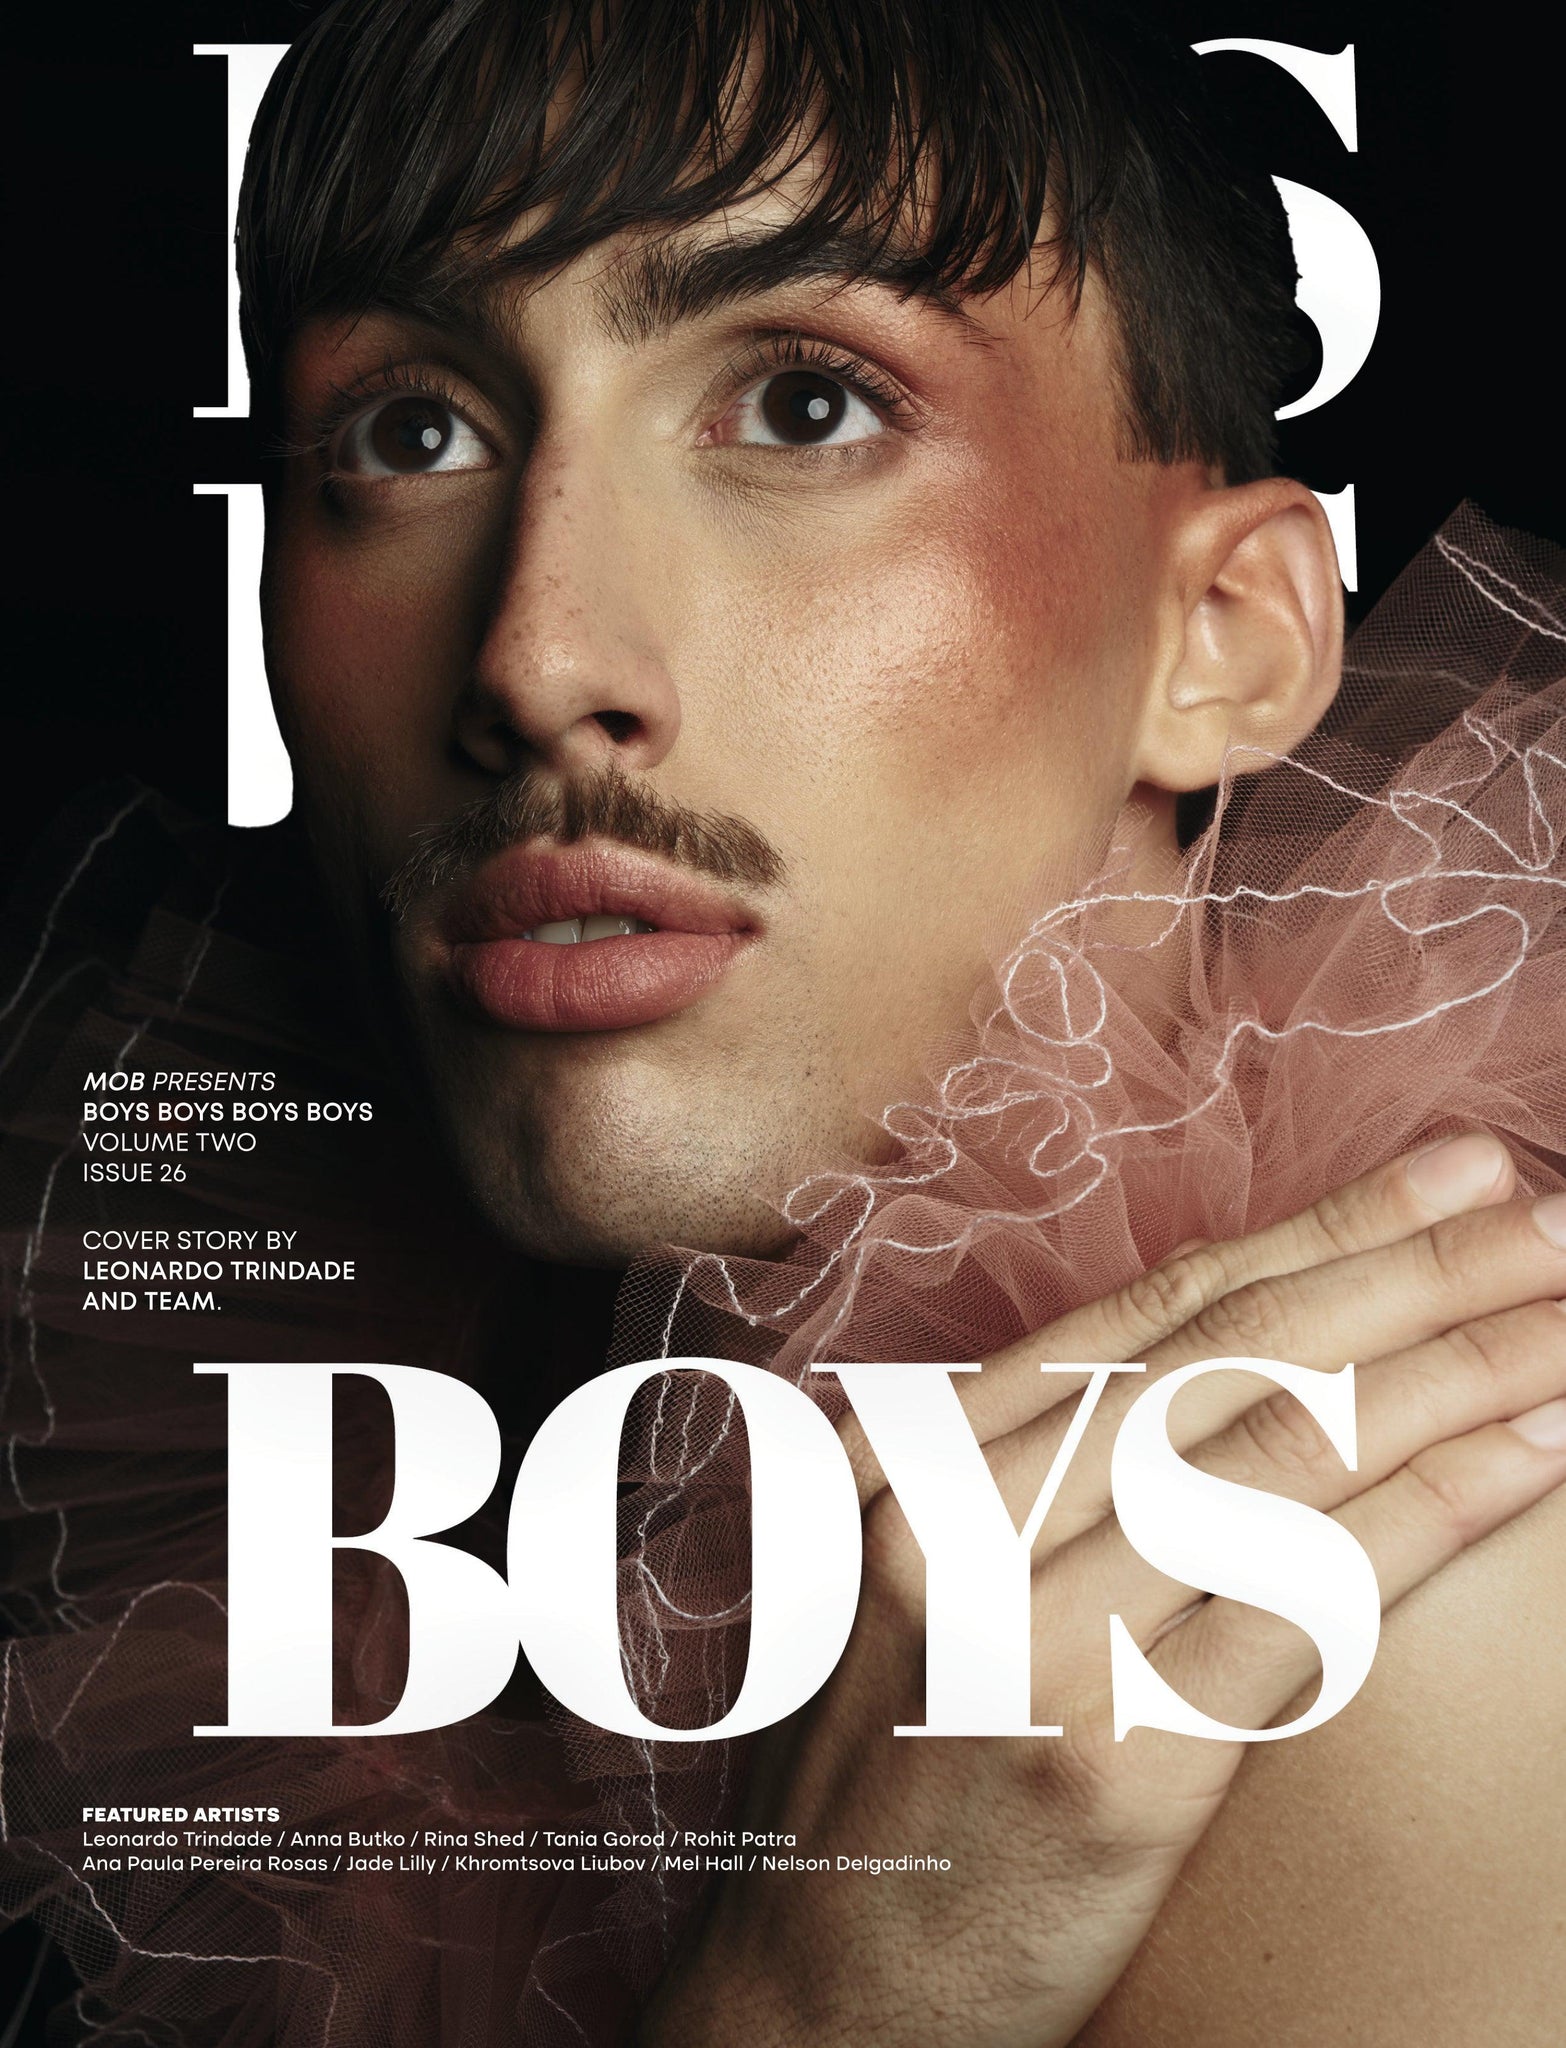 BOYS BOYS BOYS BOYS | VOLUME TWO | ISSUE #26 - Mob Journal